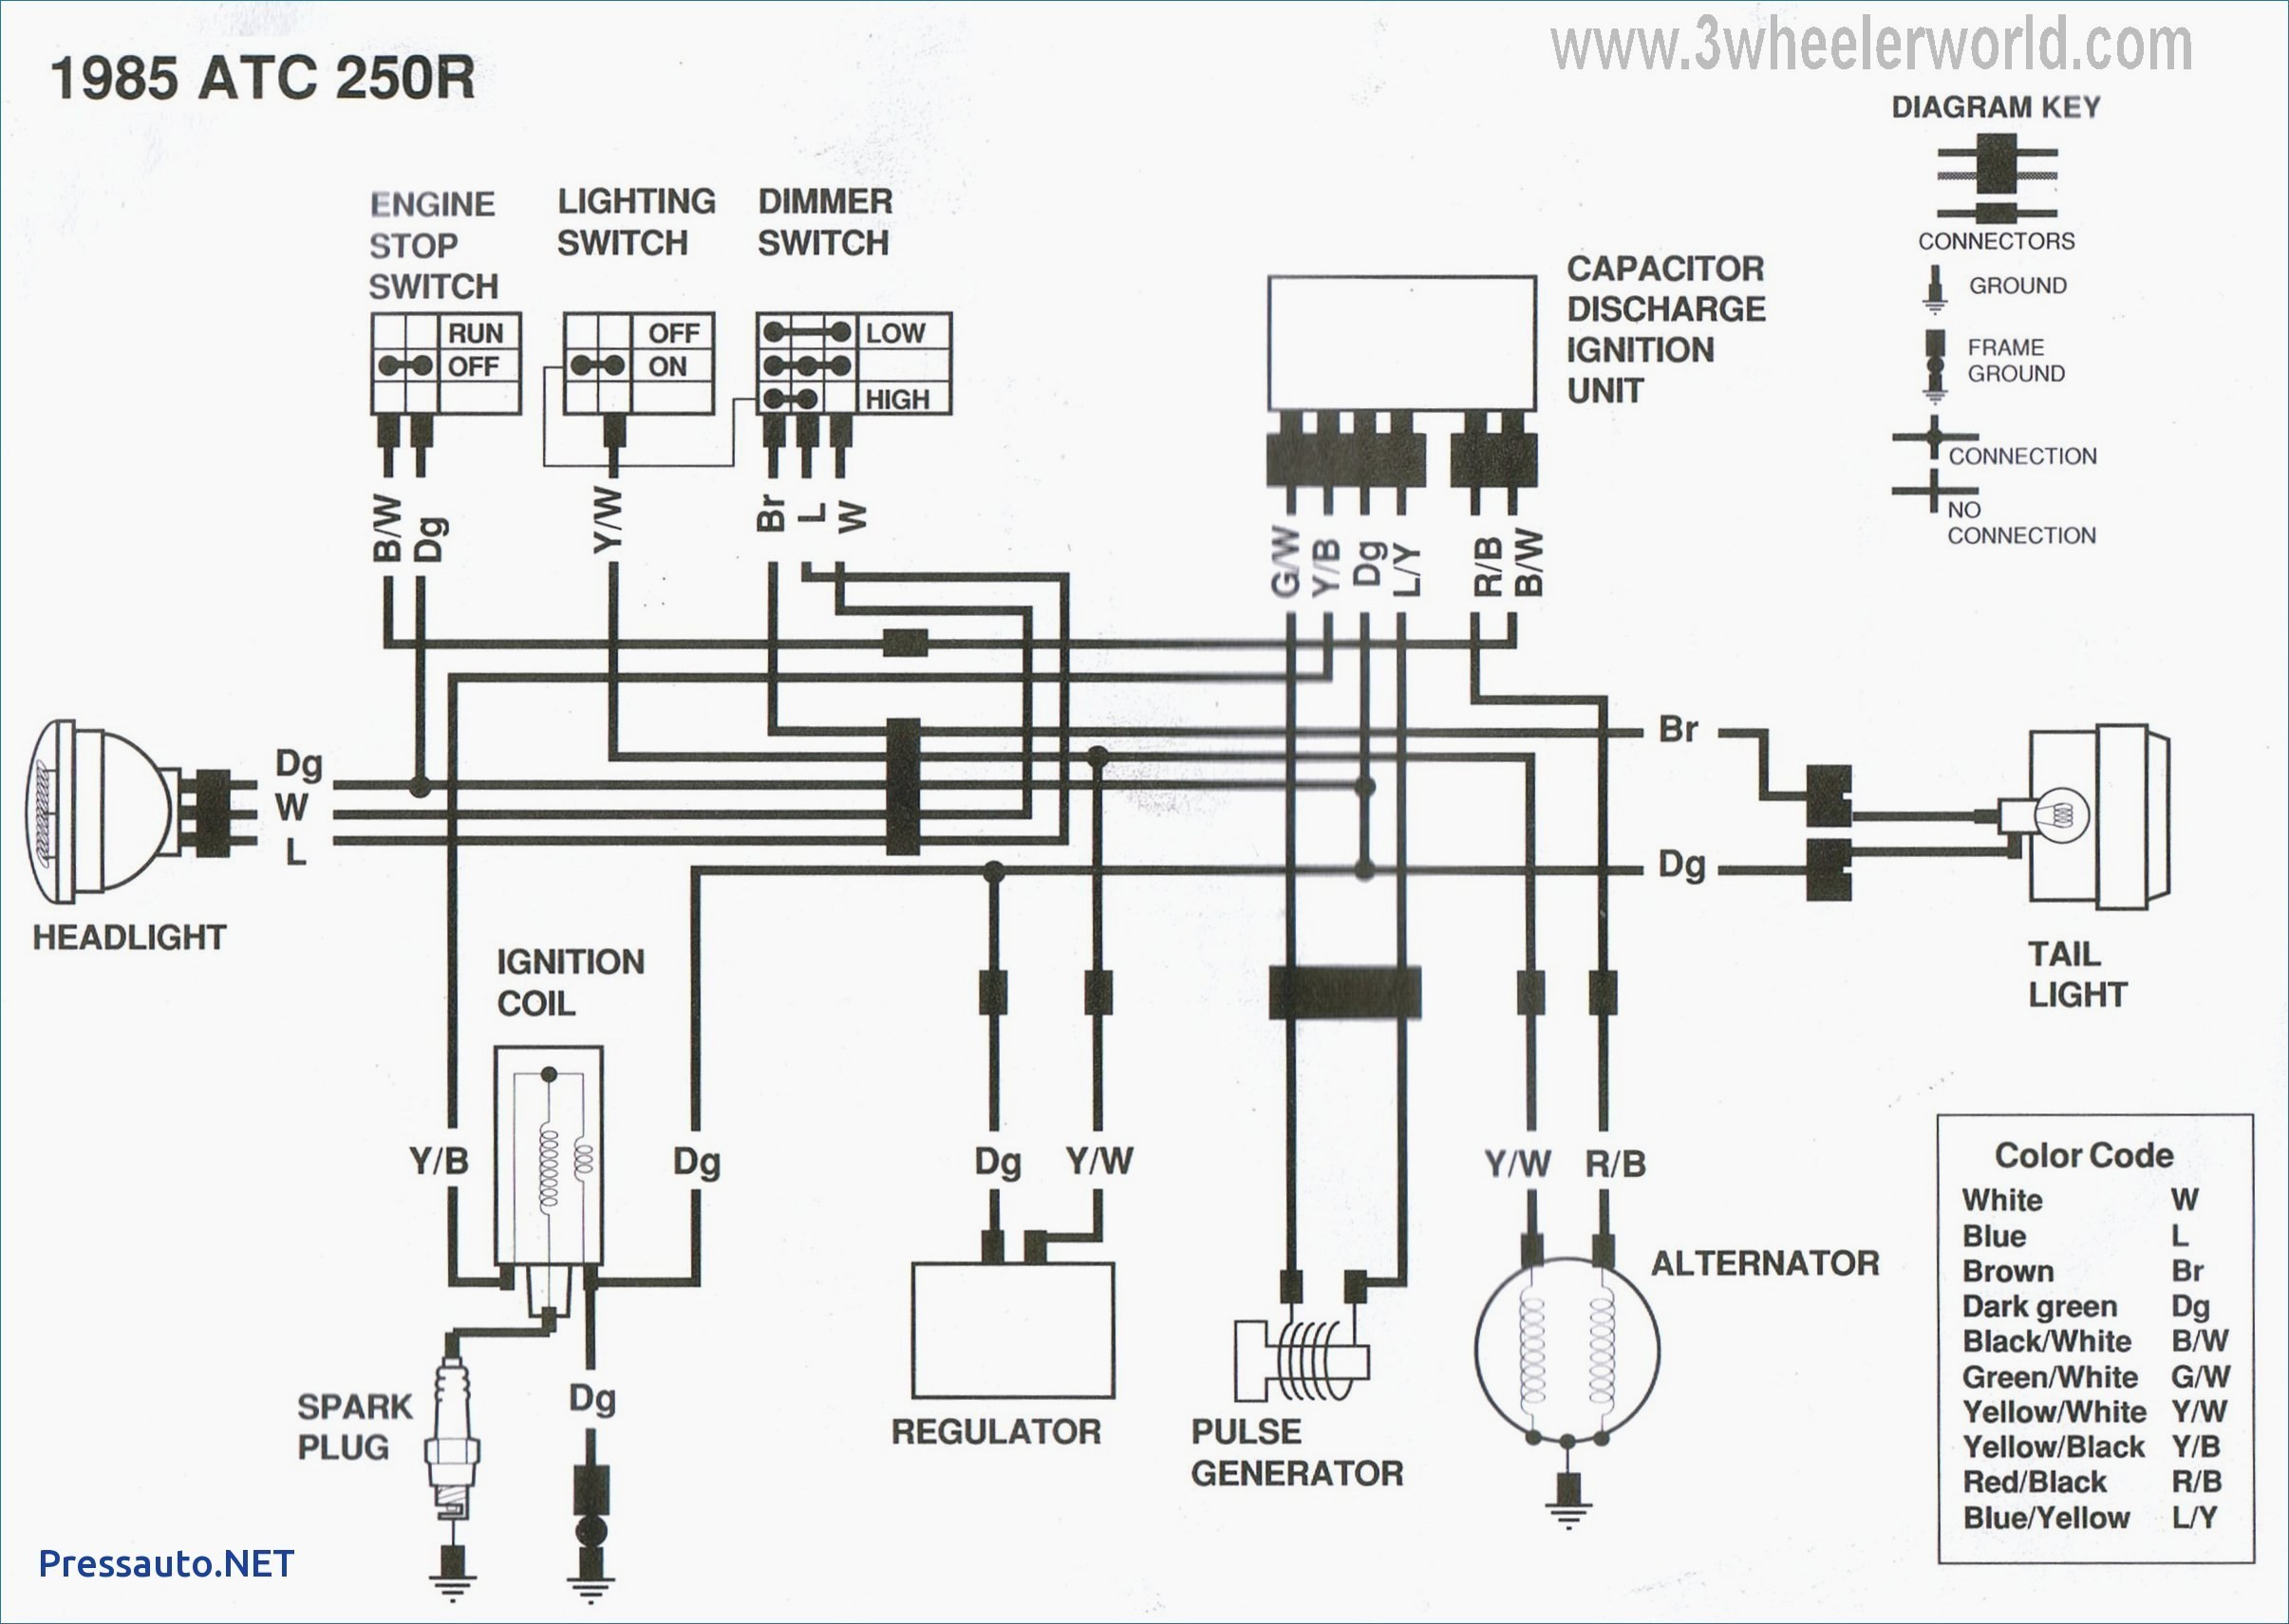 Vision Car Alarm Wiring Diagram Wiring Diagram 91 ford F150 Wiring Harness Diagram Xo Vision Of Vision Car Alarm Wiring Diagram